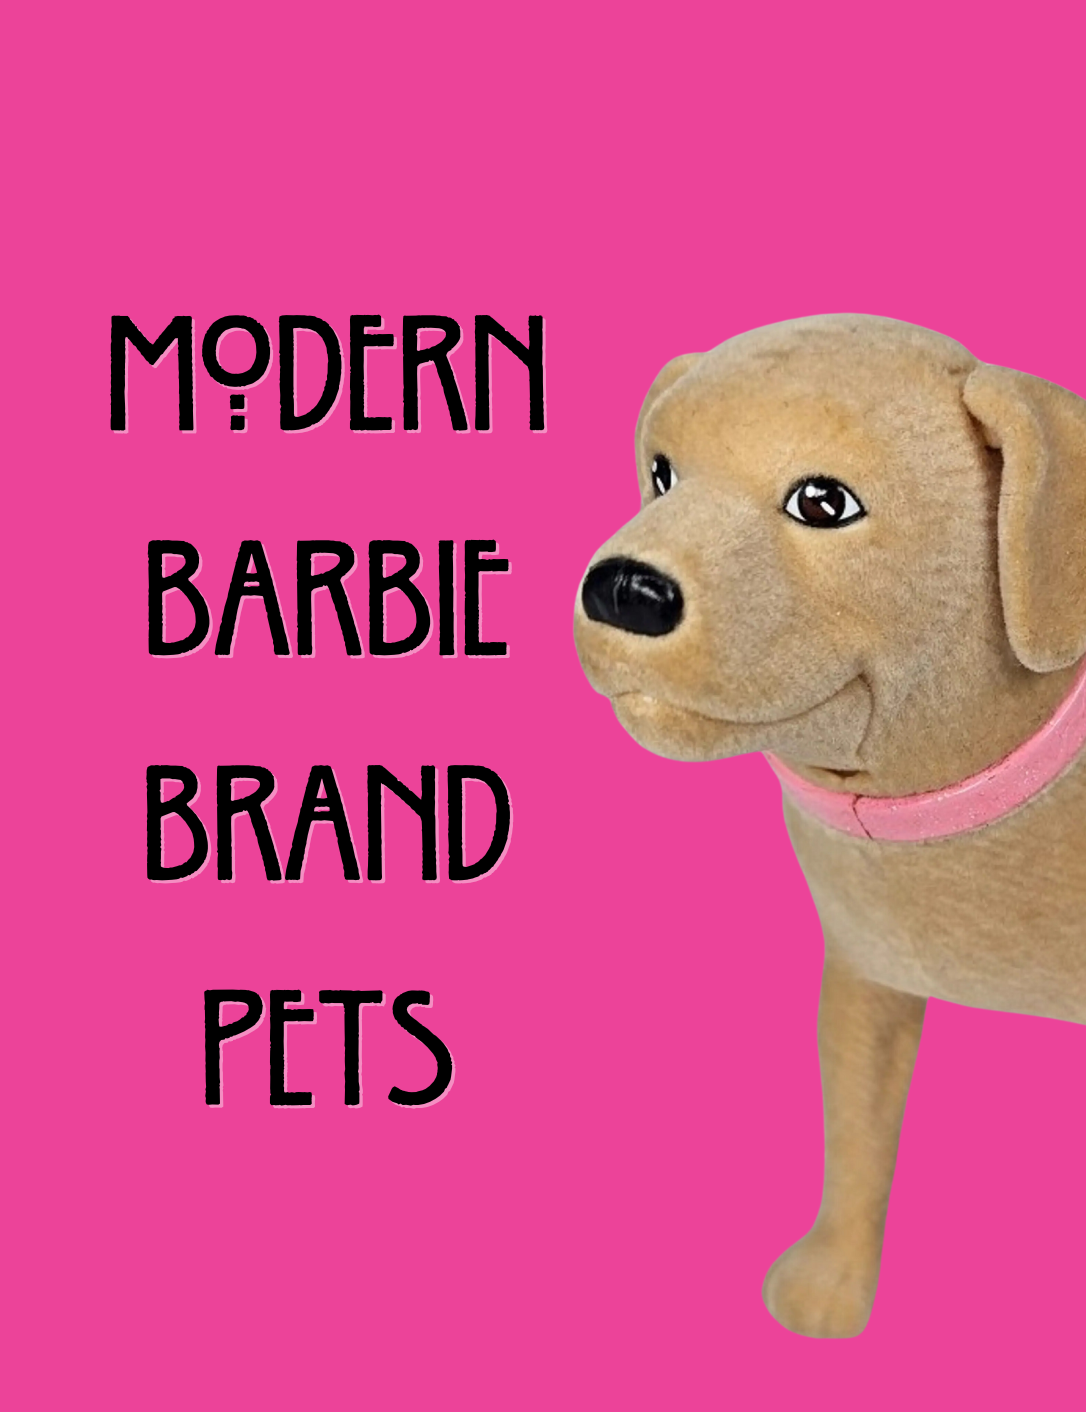 Modern Barbie Brand Pets